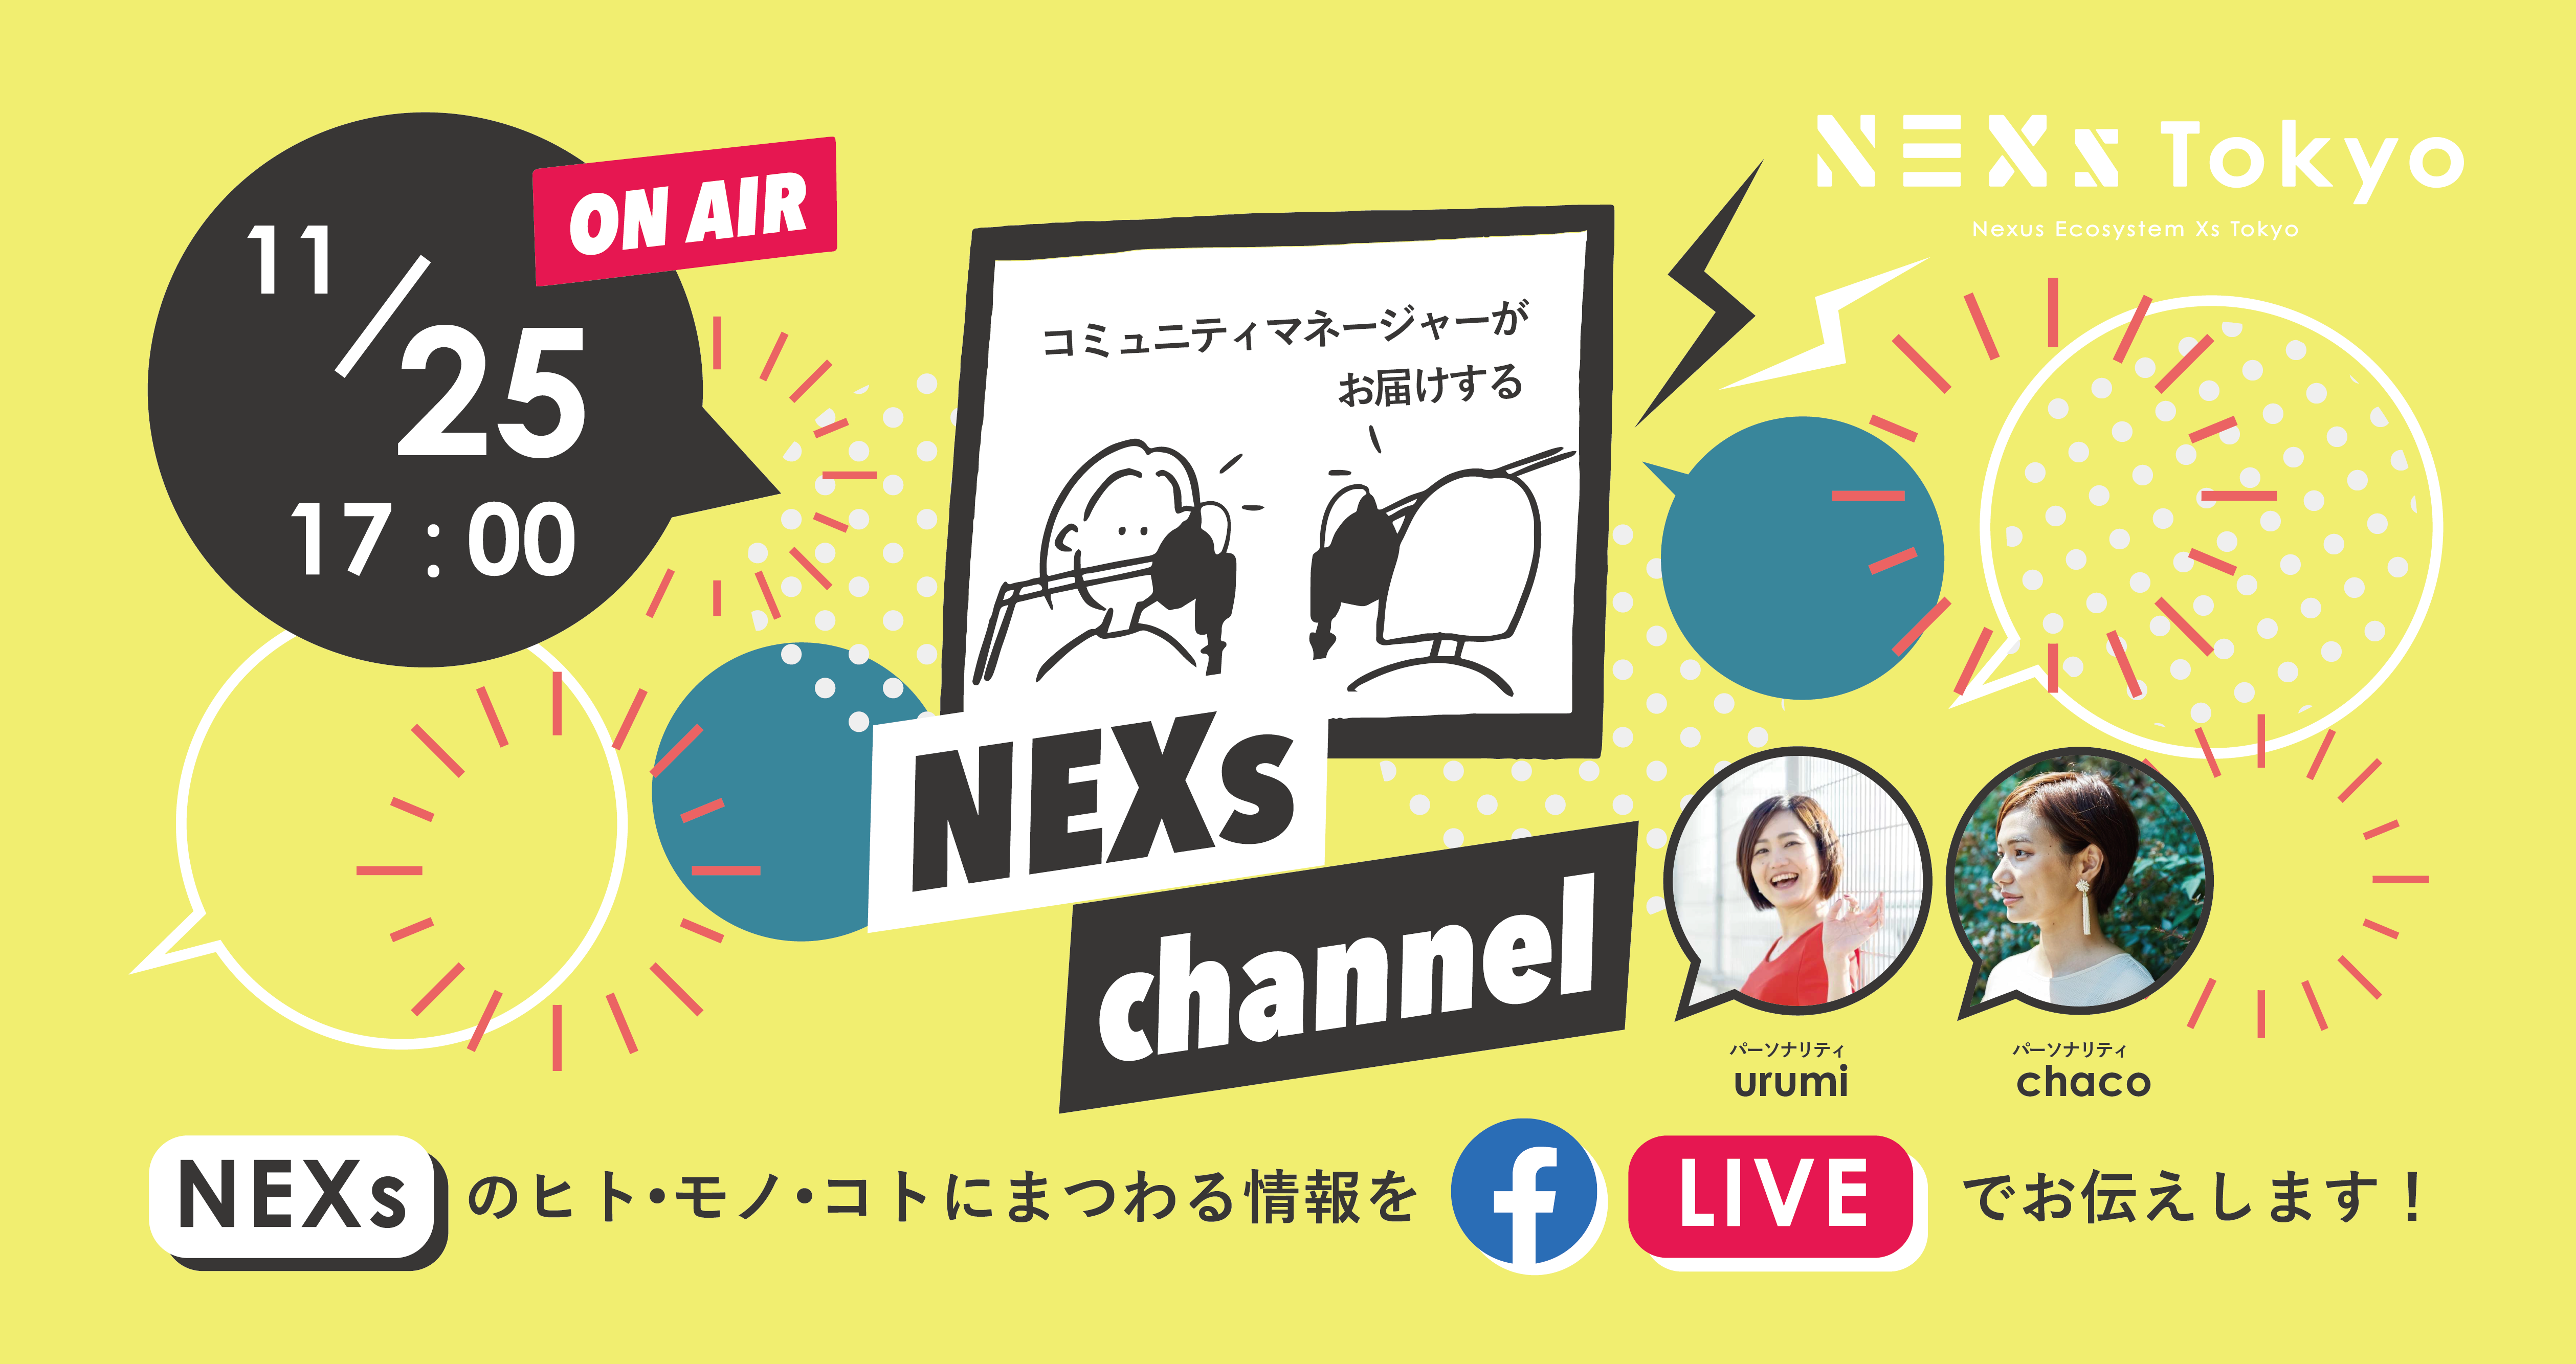 NEXs channel #11 -NEXs Tokyoのヒト・モノ・コトを特設ラジオブースから生放送でお届け！-